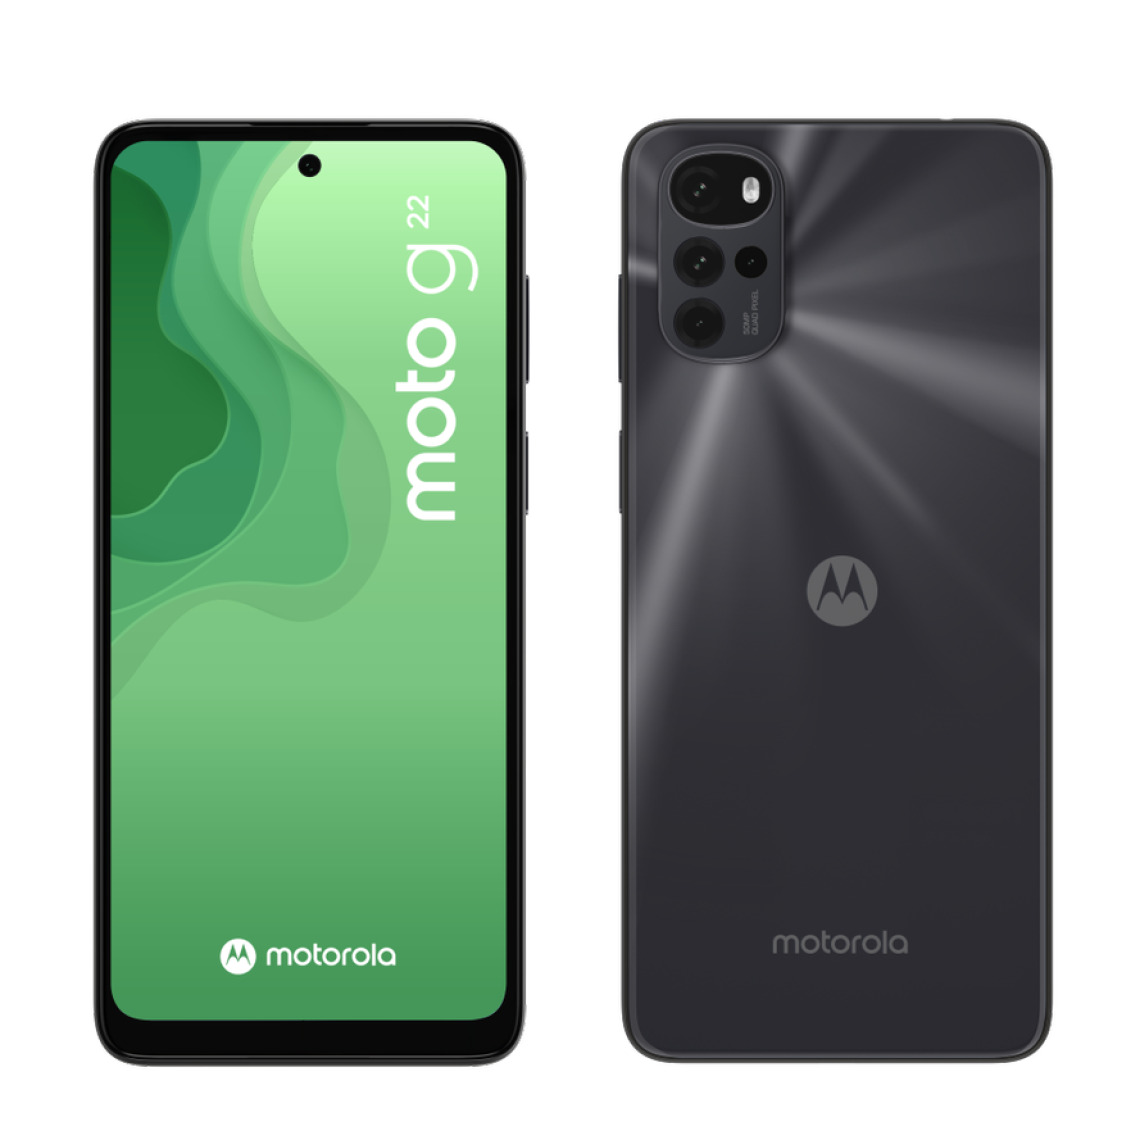 Motorola - G22 - 64 GO - Noir cosmique  - Smartphone Android